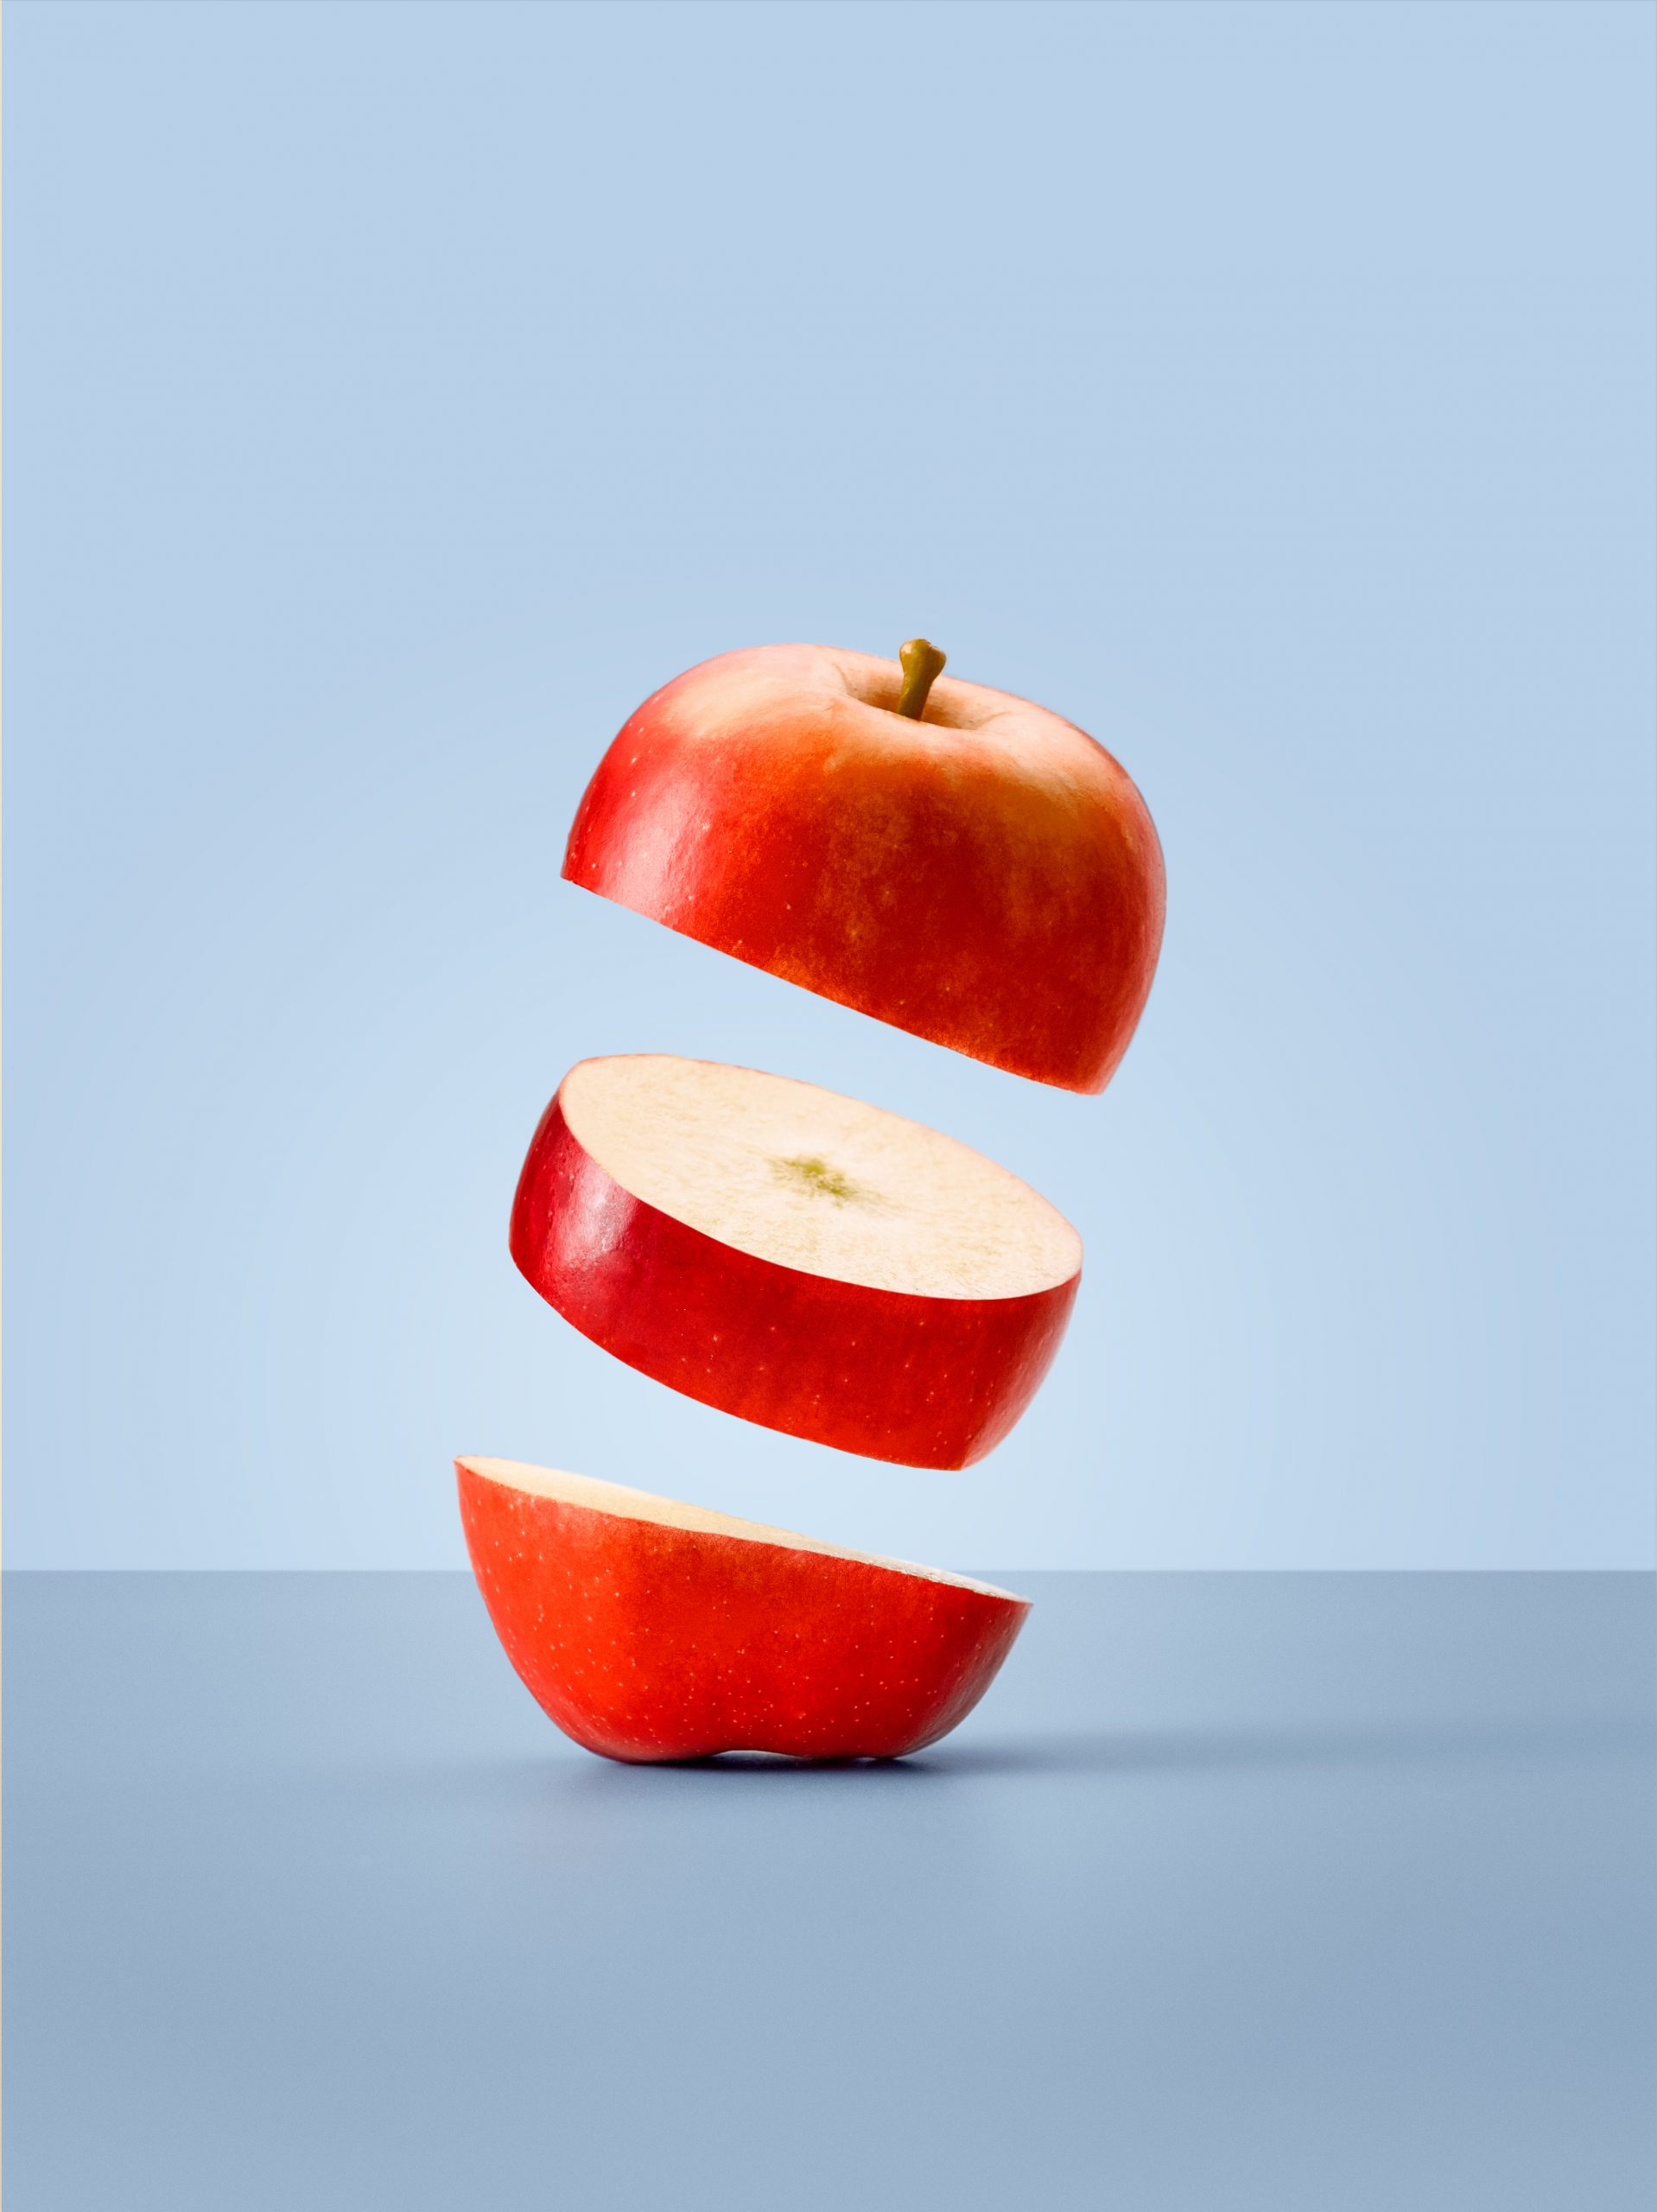 one rockit apple sliced into three chunks 